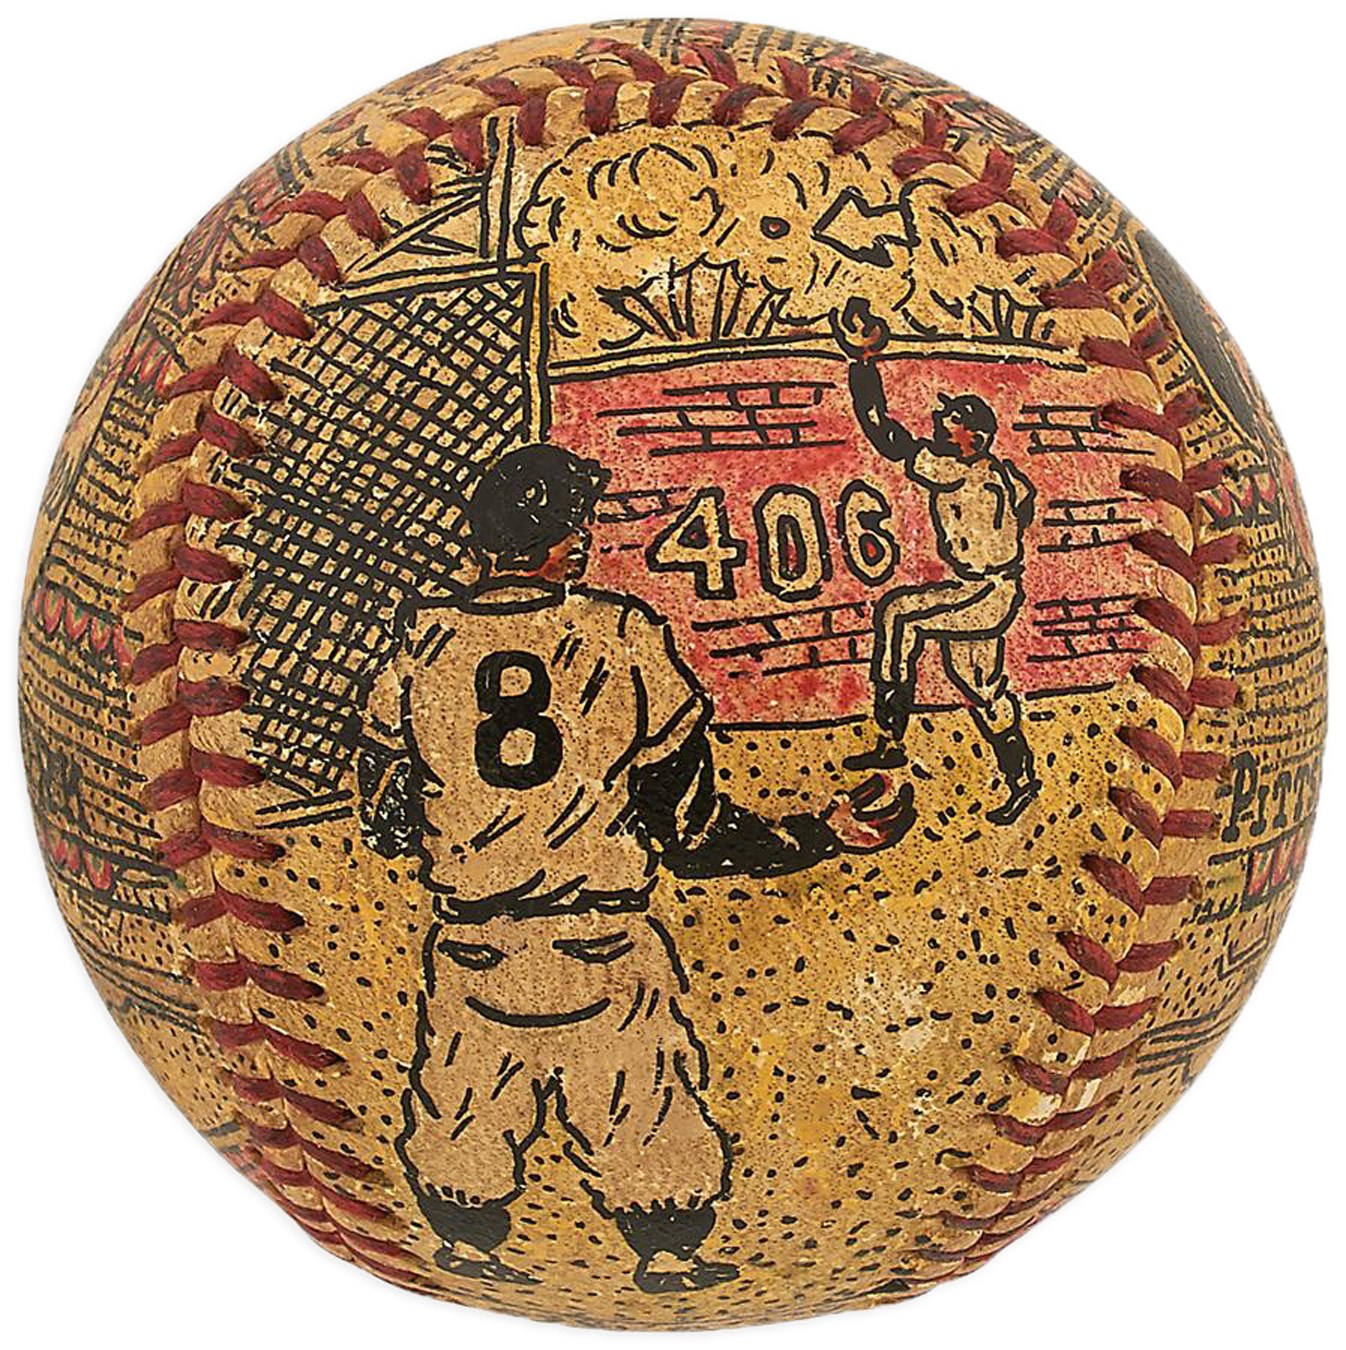 - 1960 World Series Folk Art Painted Baseball by George Sosnak